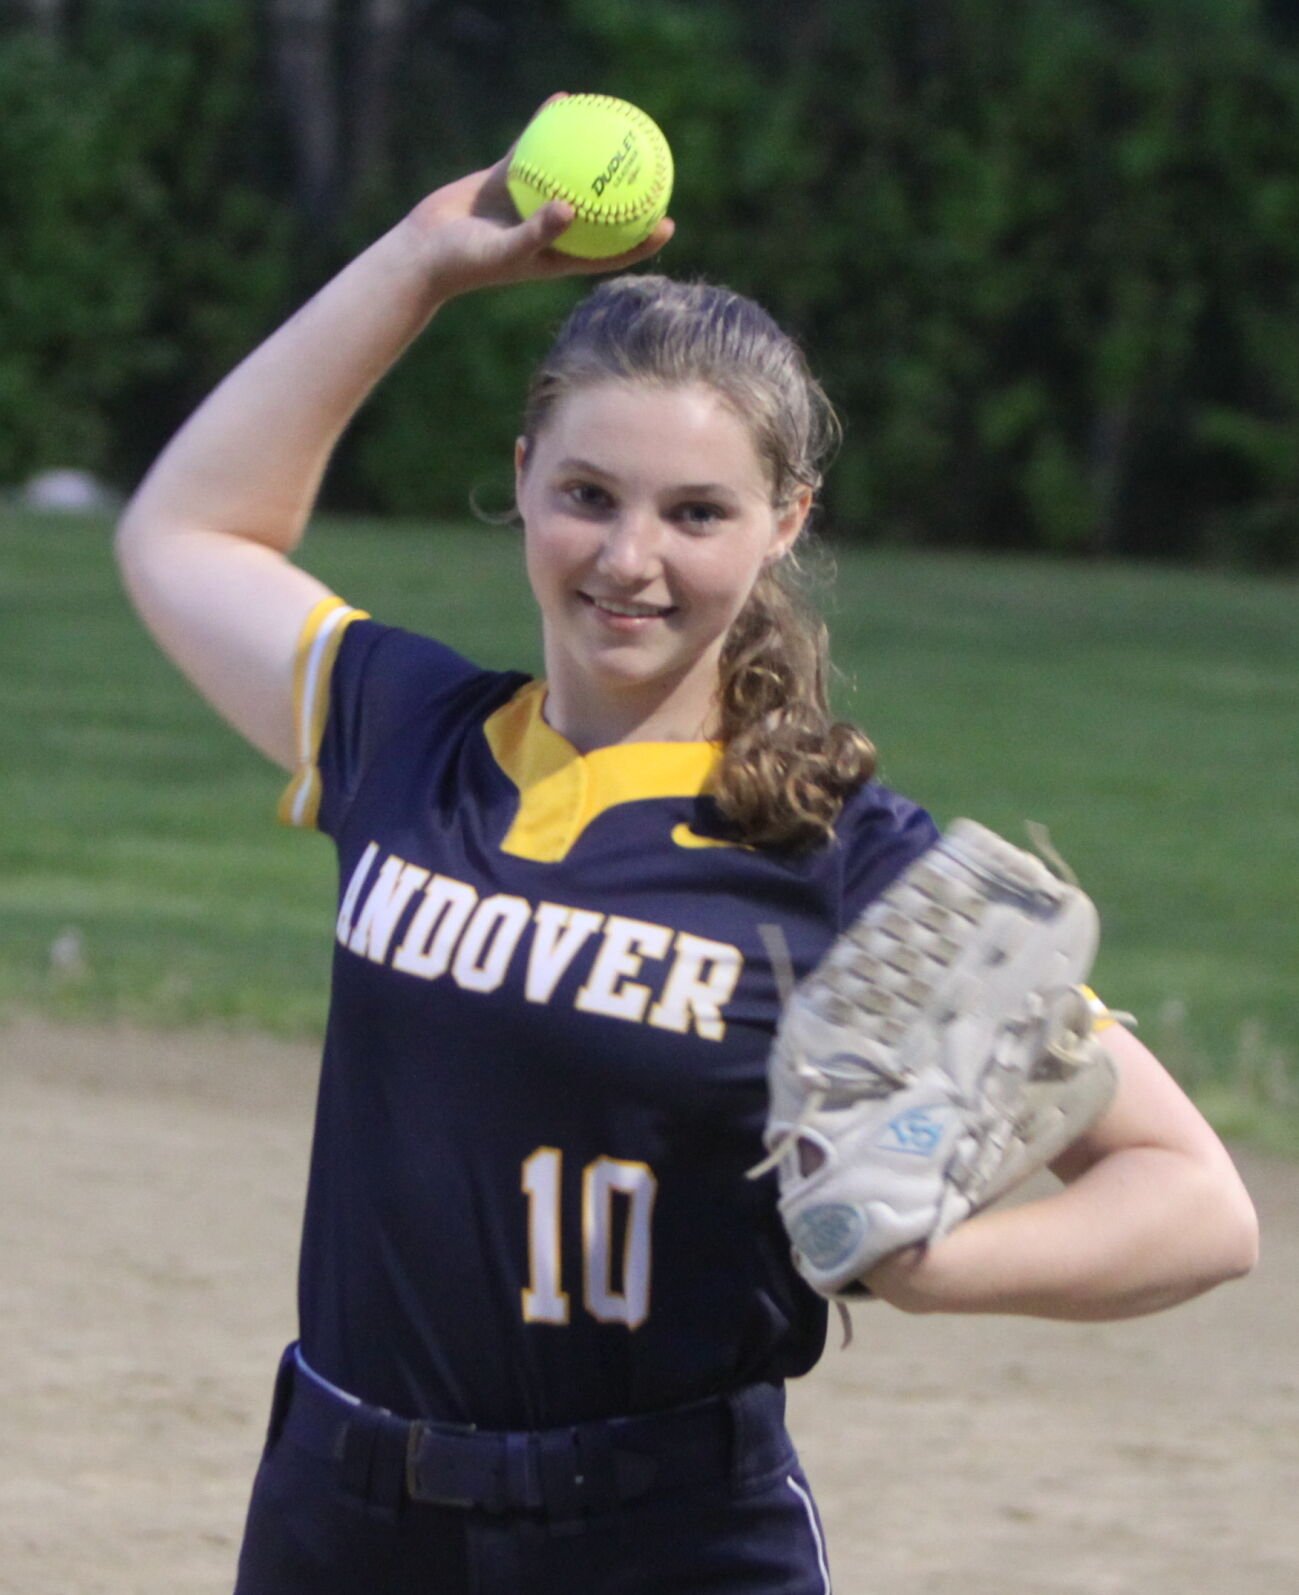 Molly Purtschert shines as Andover’s rising softball star in successful season